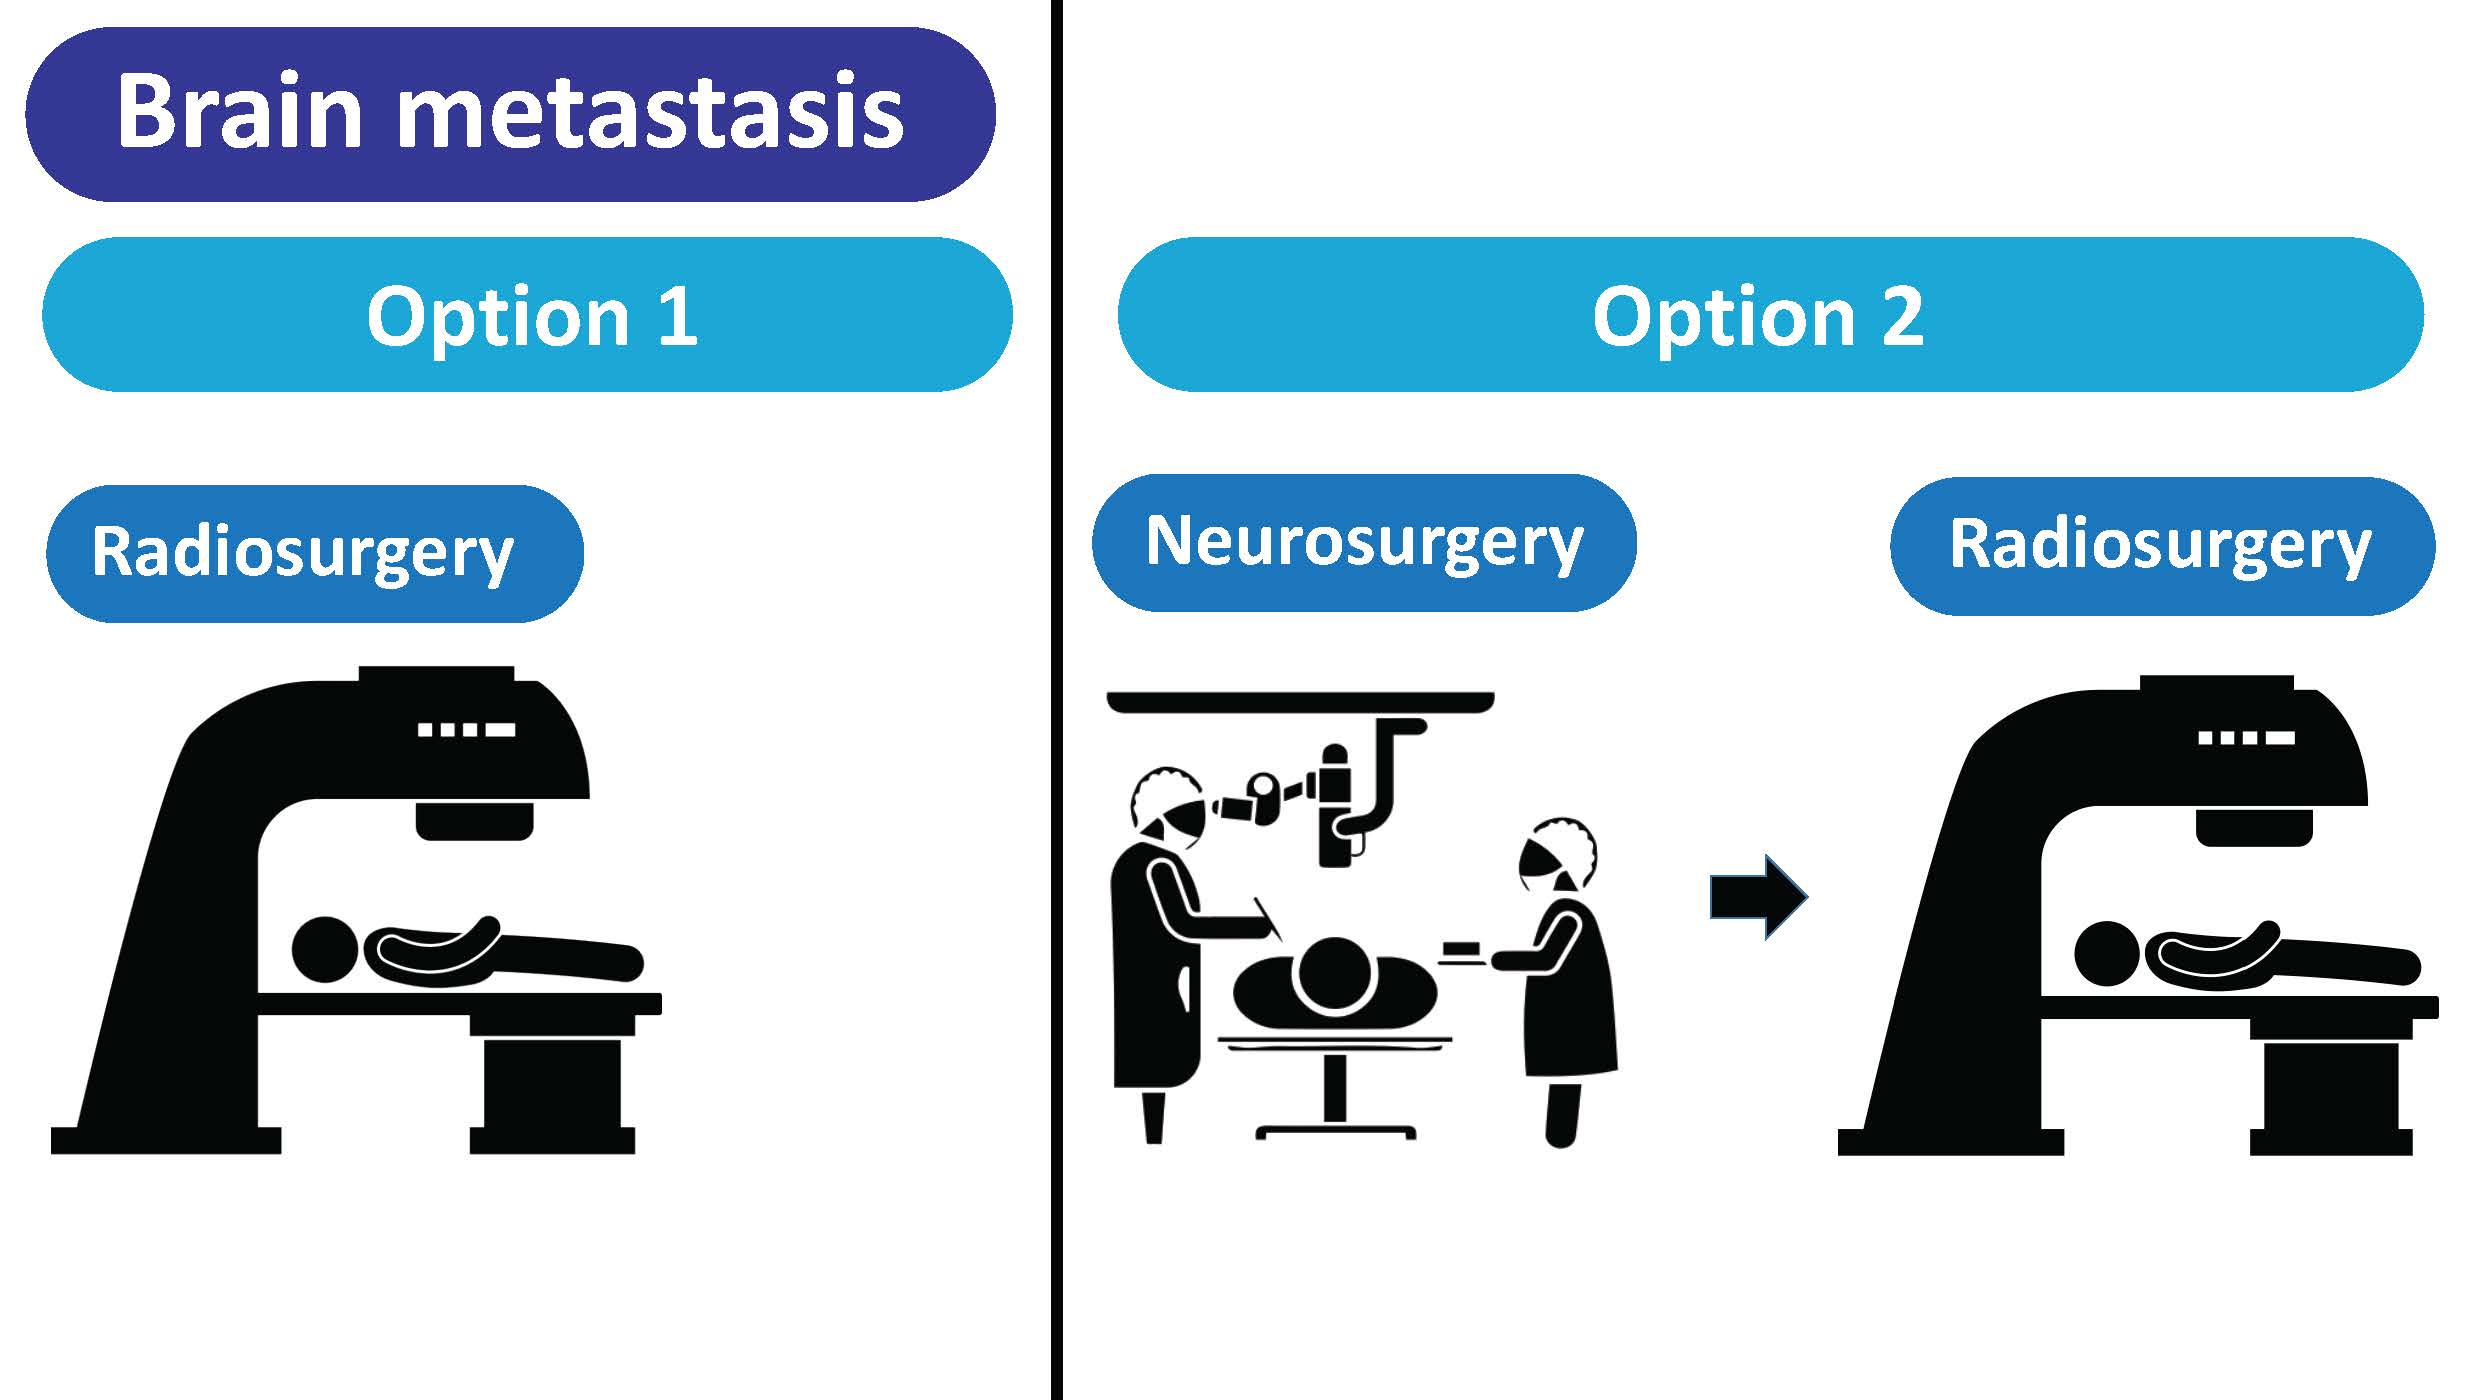 Option one radiosurgery alone or option two neuro surgery followed by radio surgery.